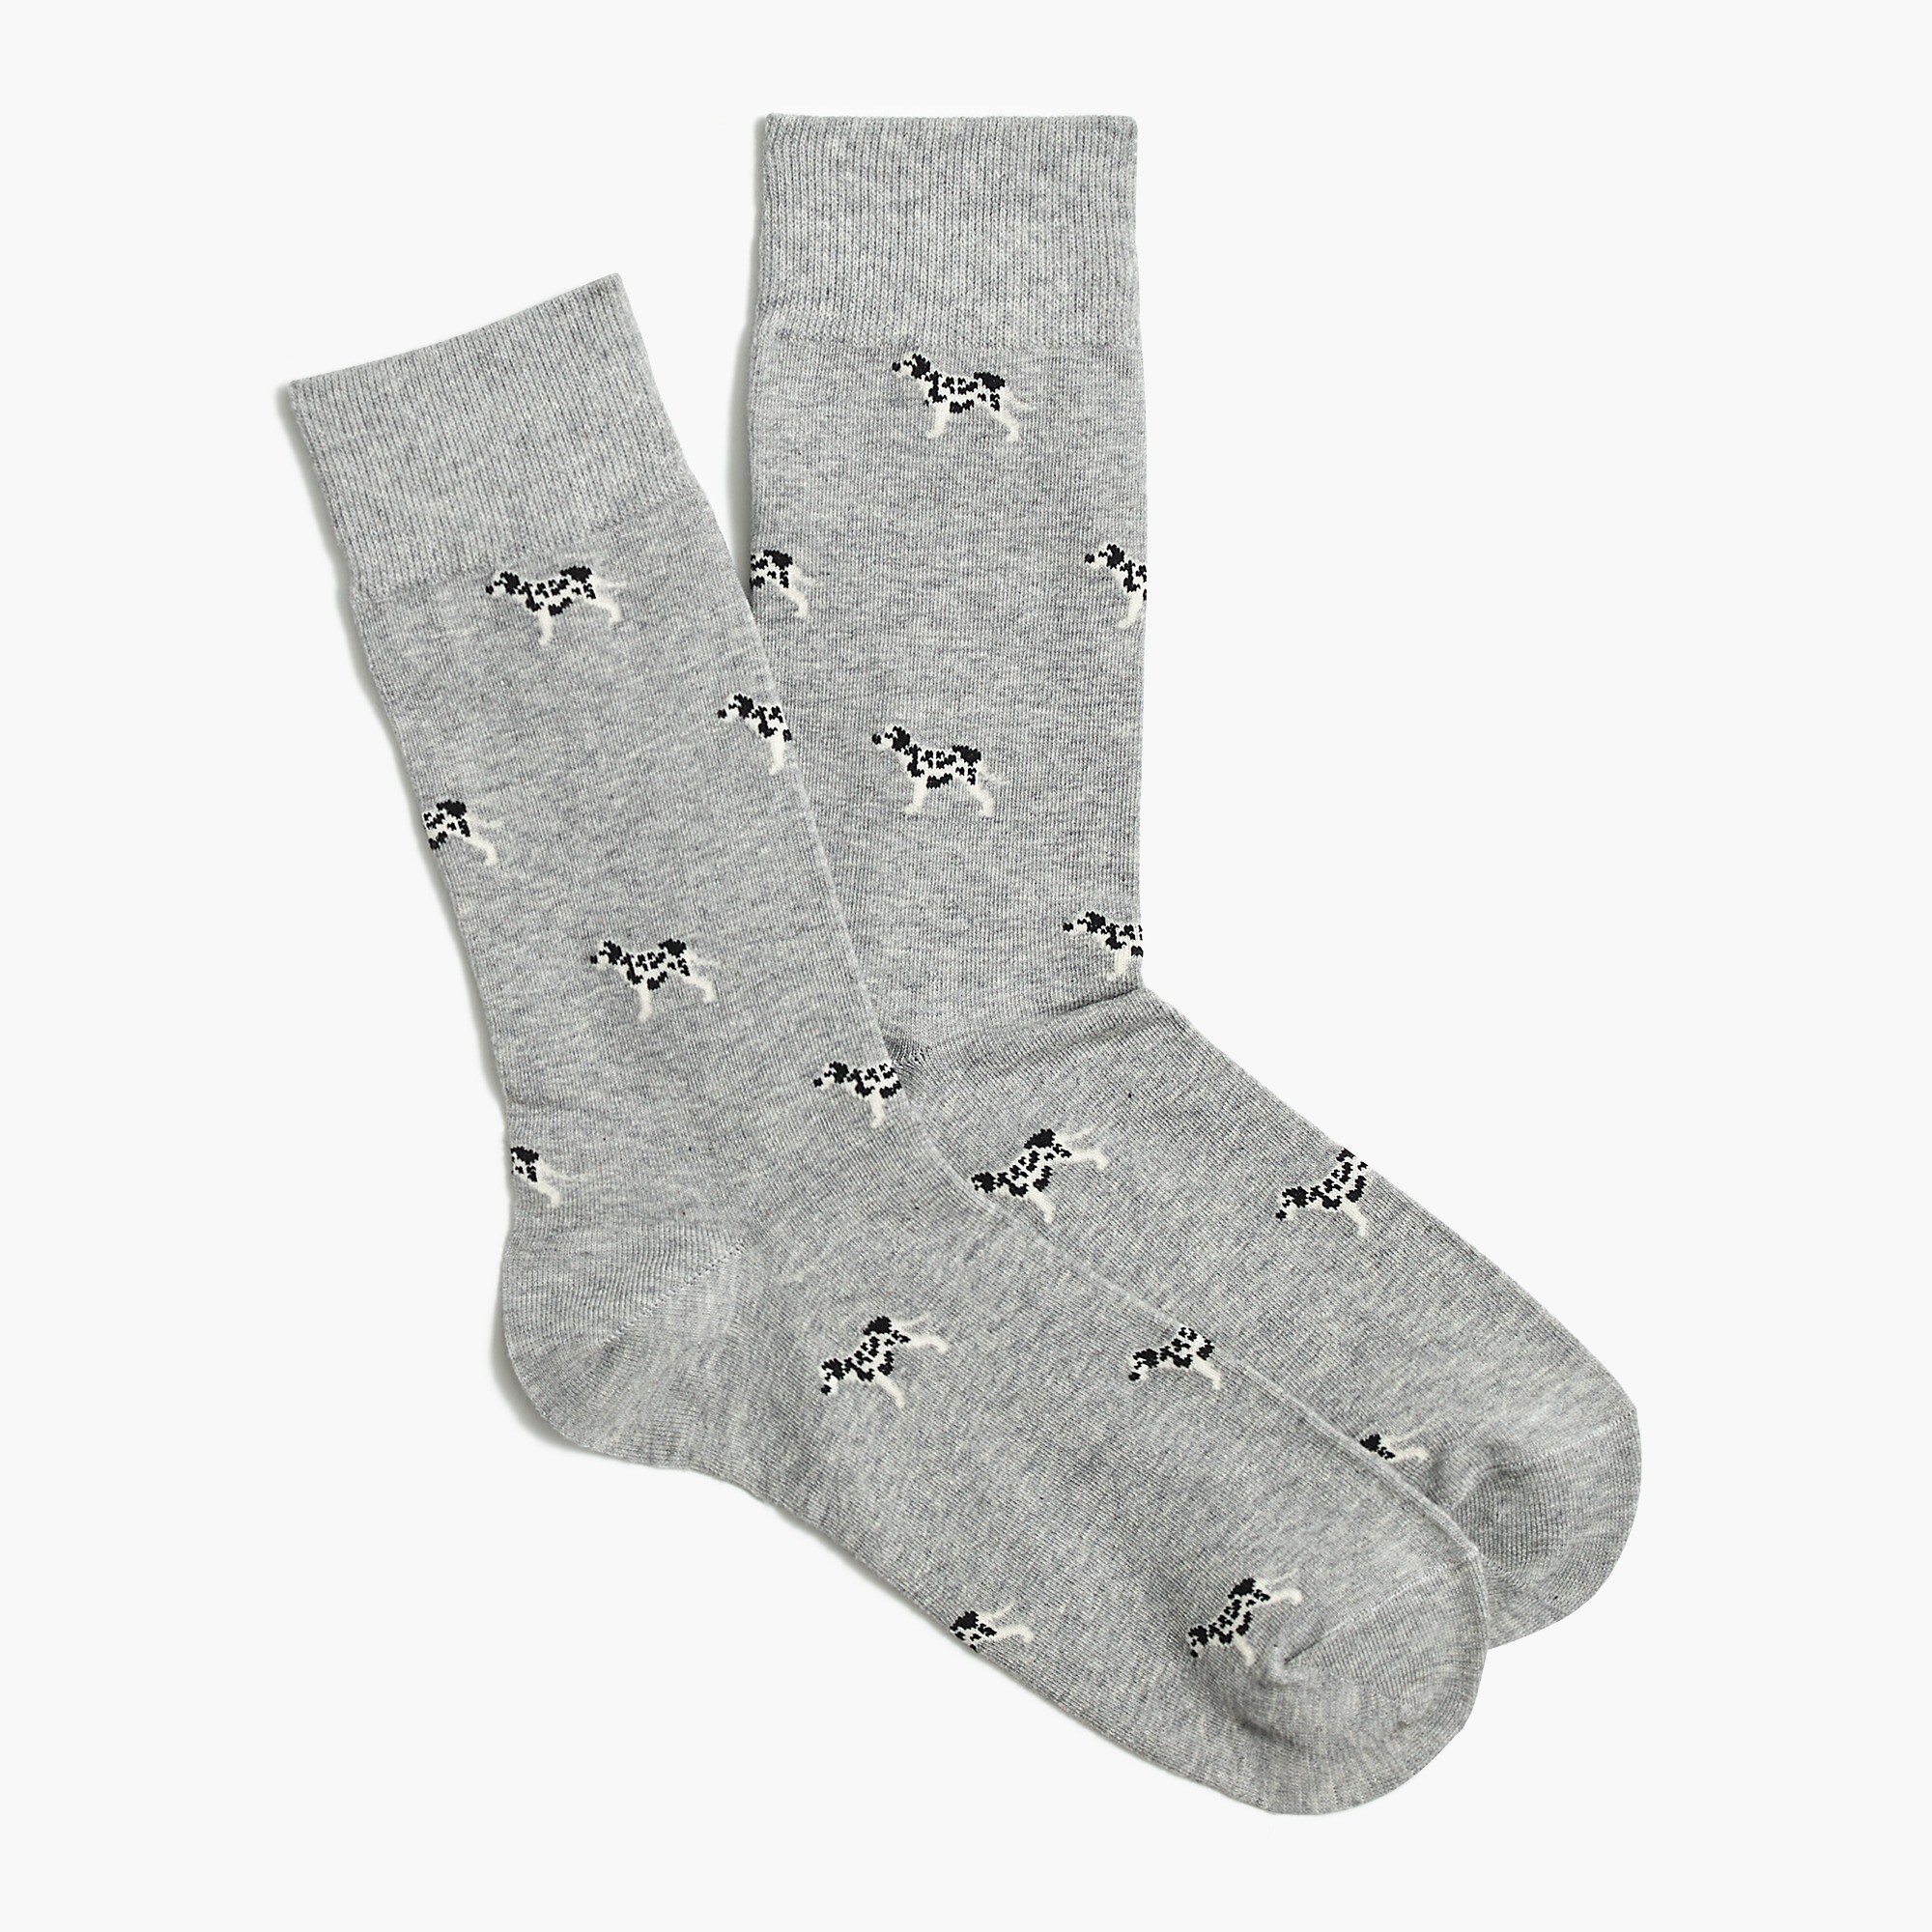 Jcrew Dalmatian socks